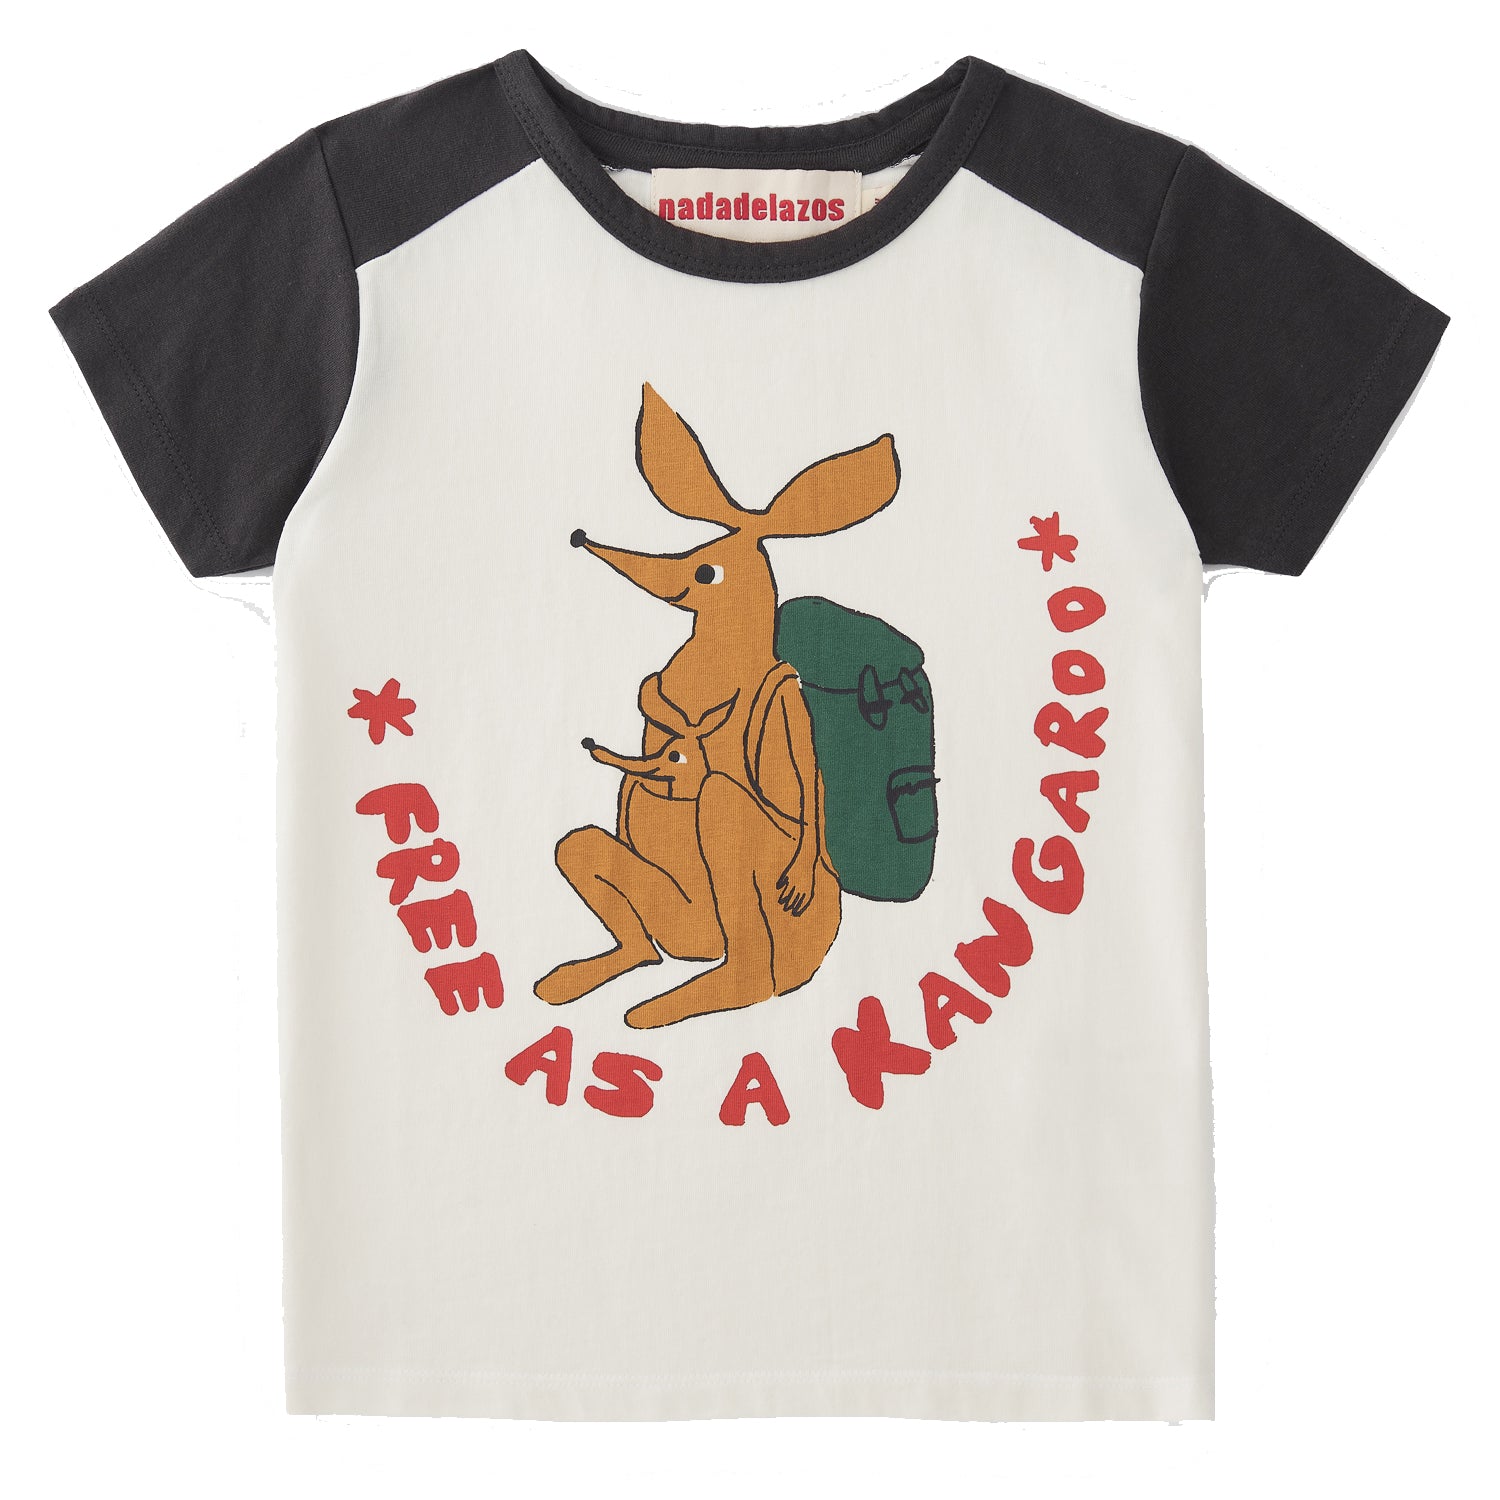 Nadadelazos & a Kangaroo Green Free as The Kid – Crib T-Shirt